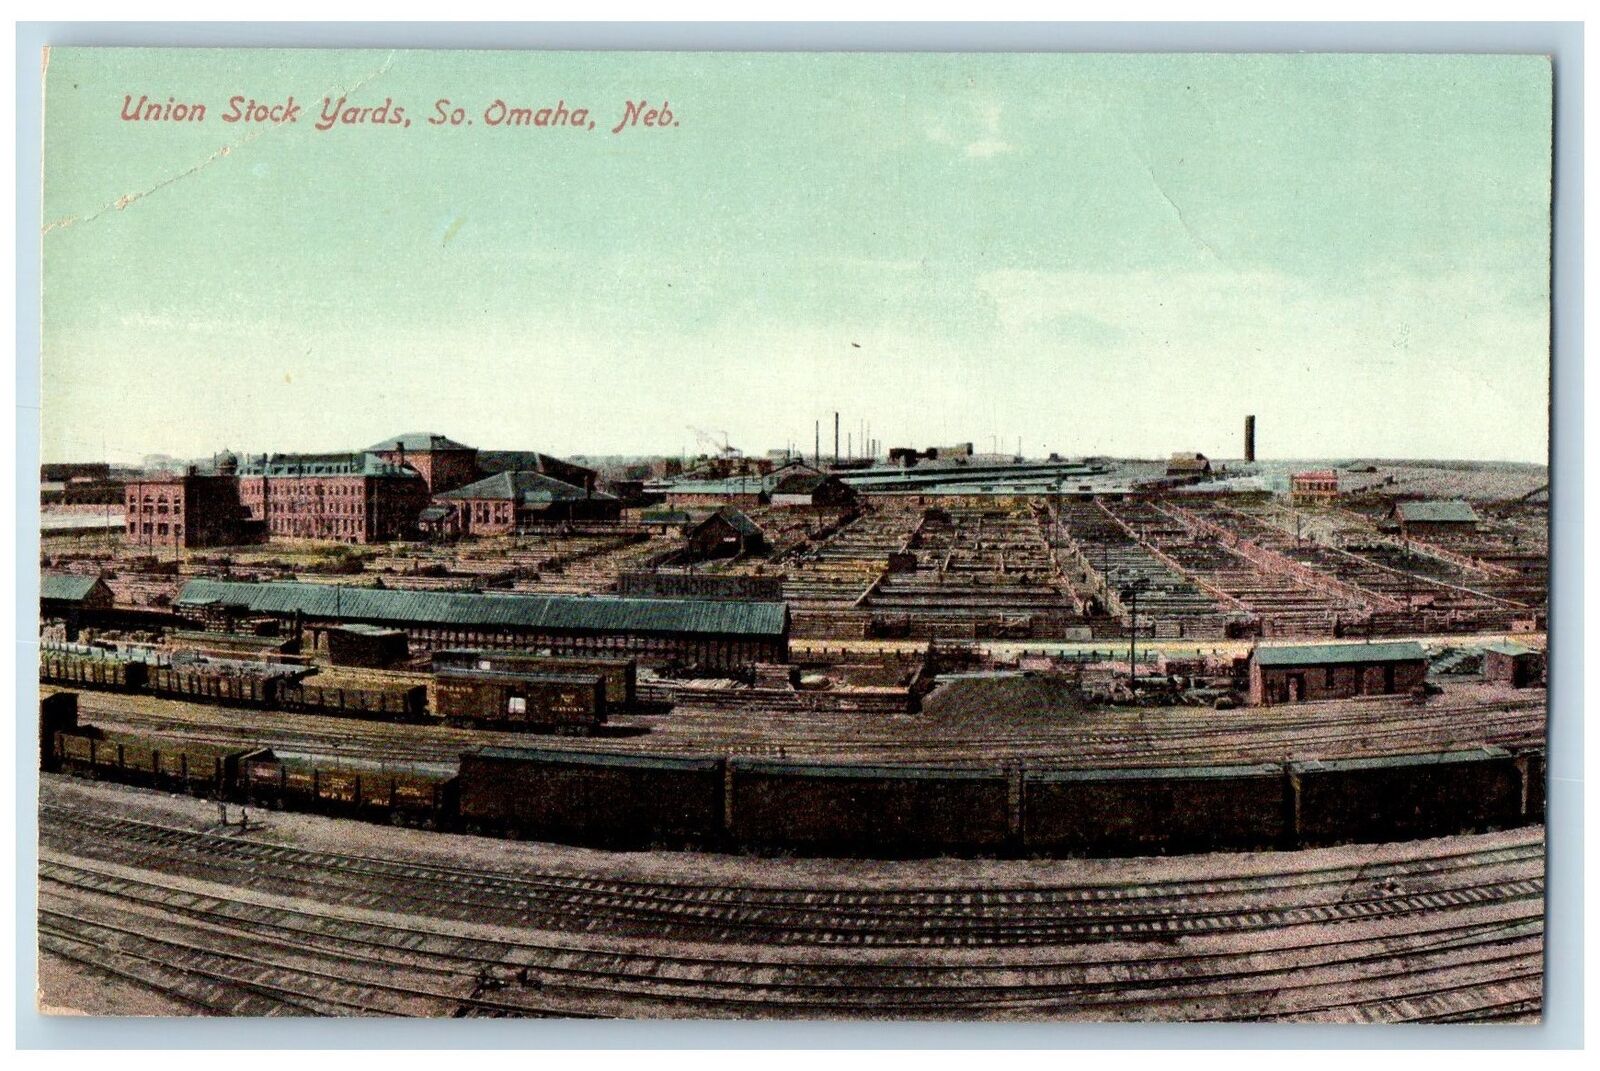 South Omaha Nebraska NE Postcard Union Stock Yards Railroad Scene c1910s Antique